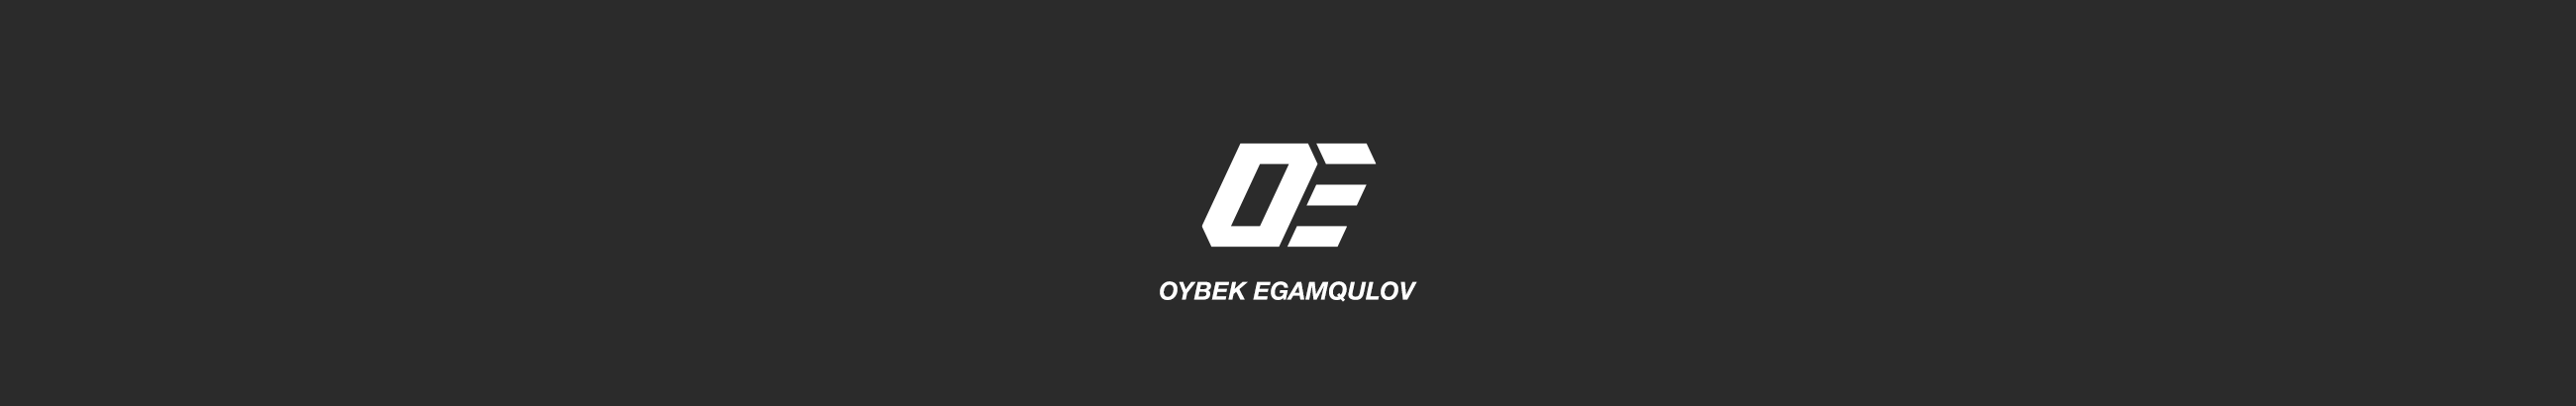 Oybek Egamqulov's profile banner